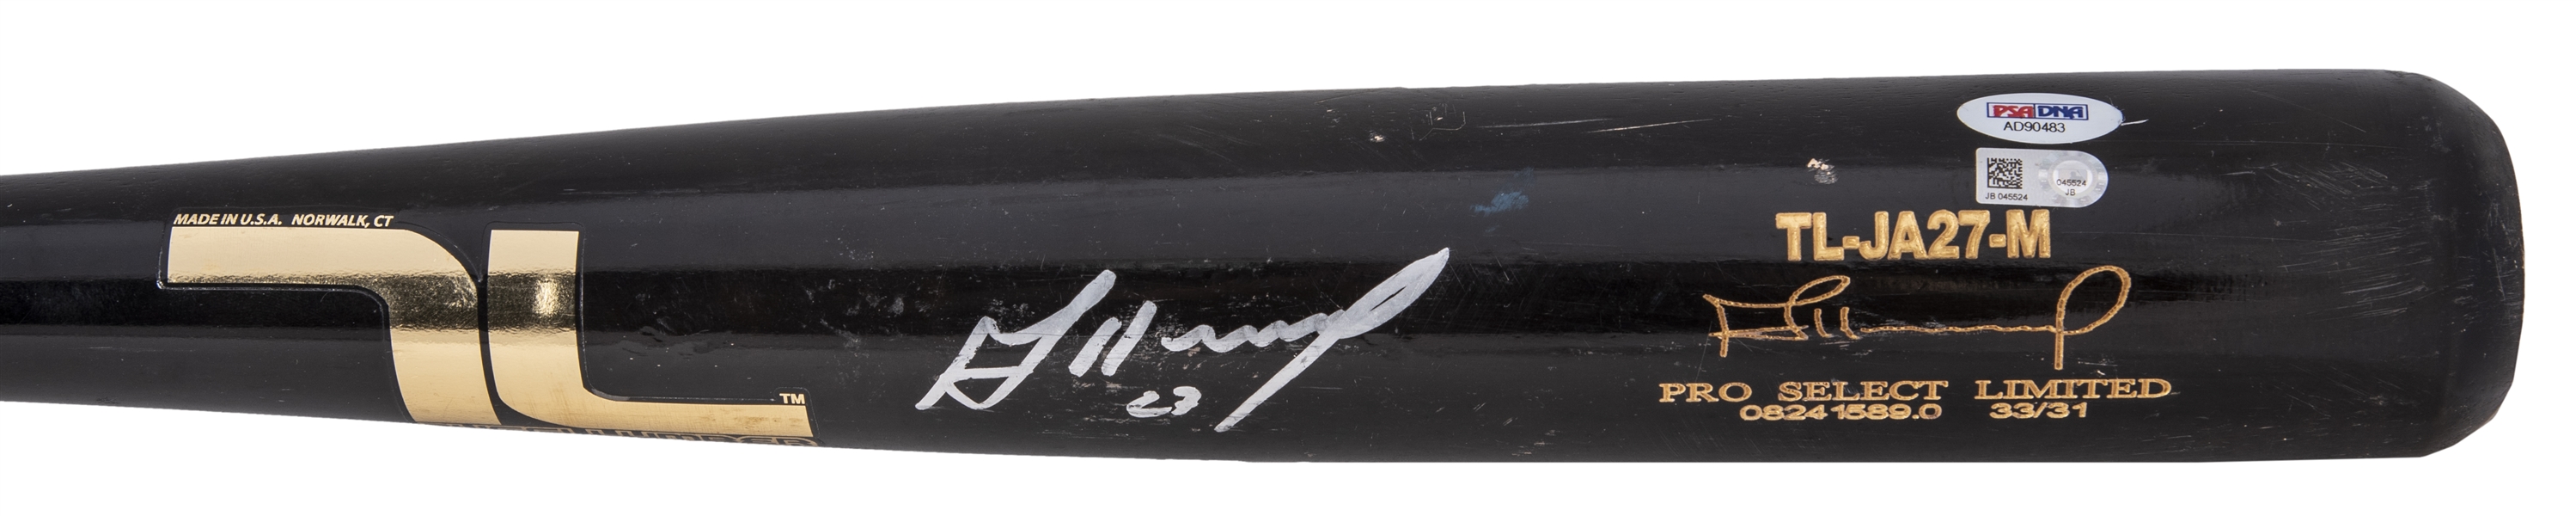 Jose Altuve Signed Pro Model Bat PSA COA MLB Houston Astros Autograph